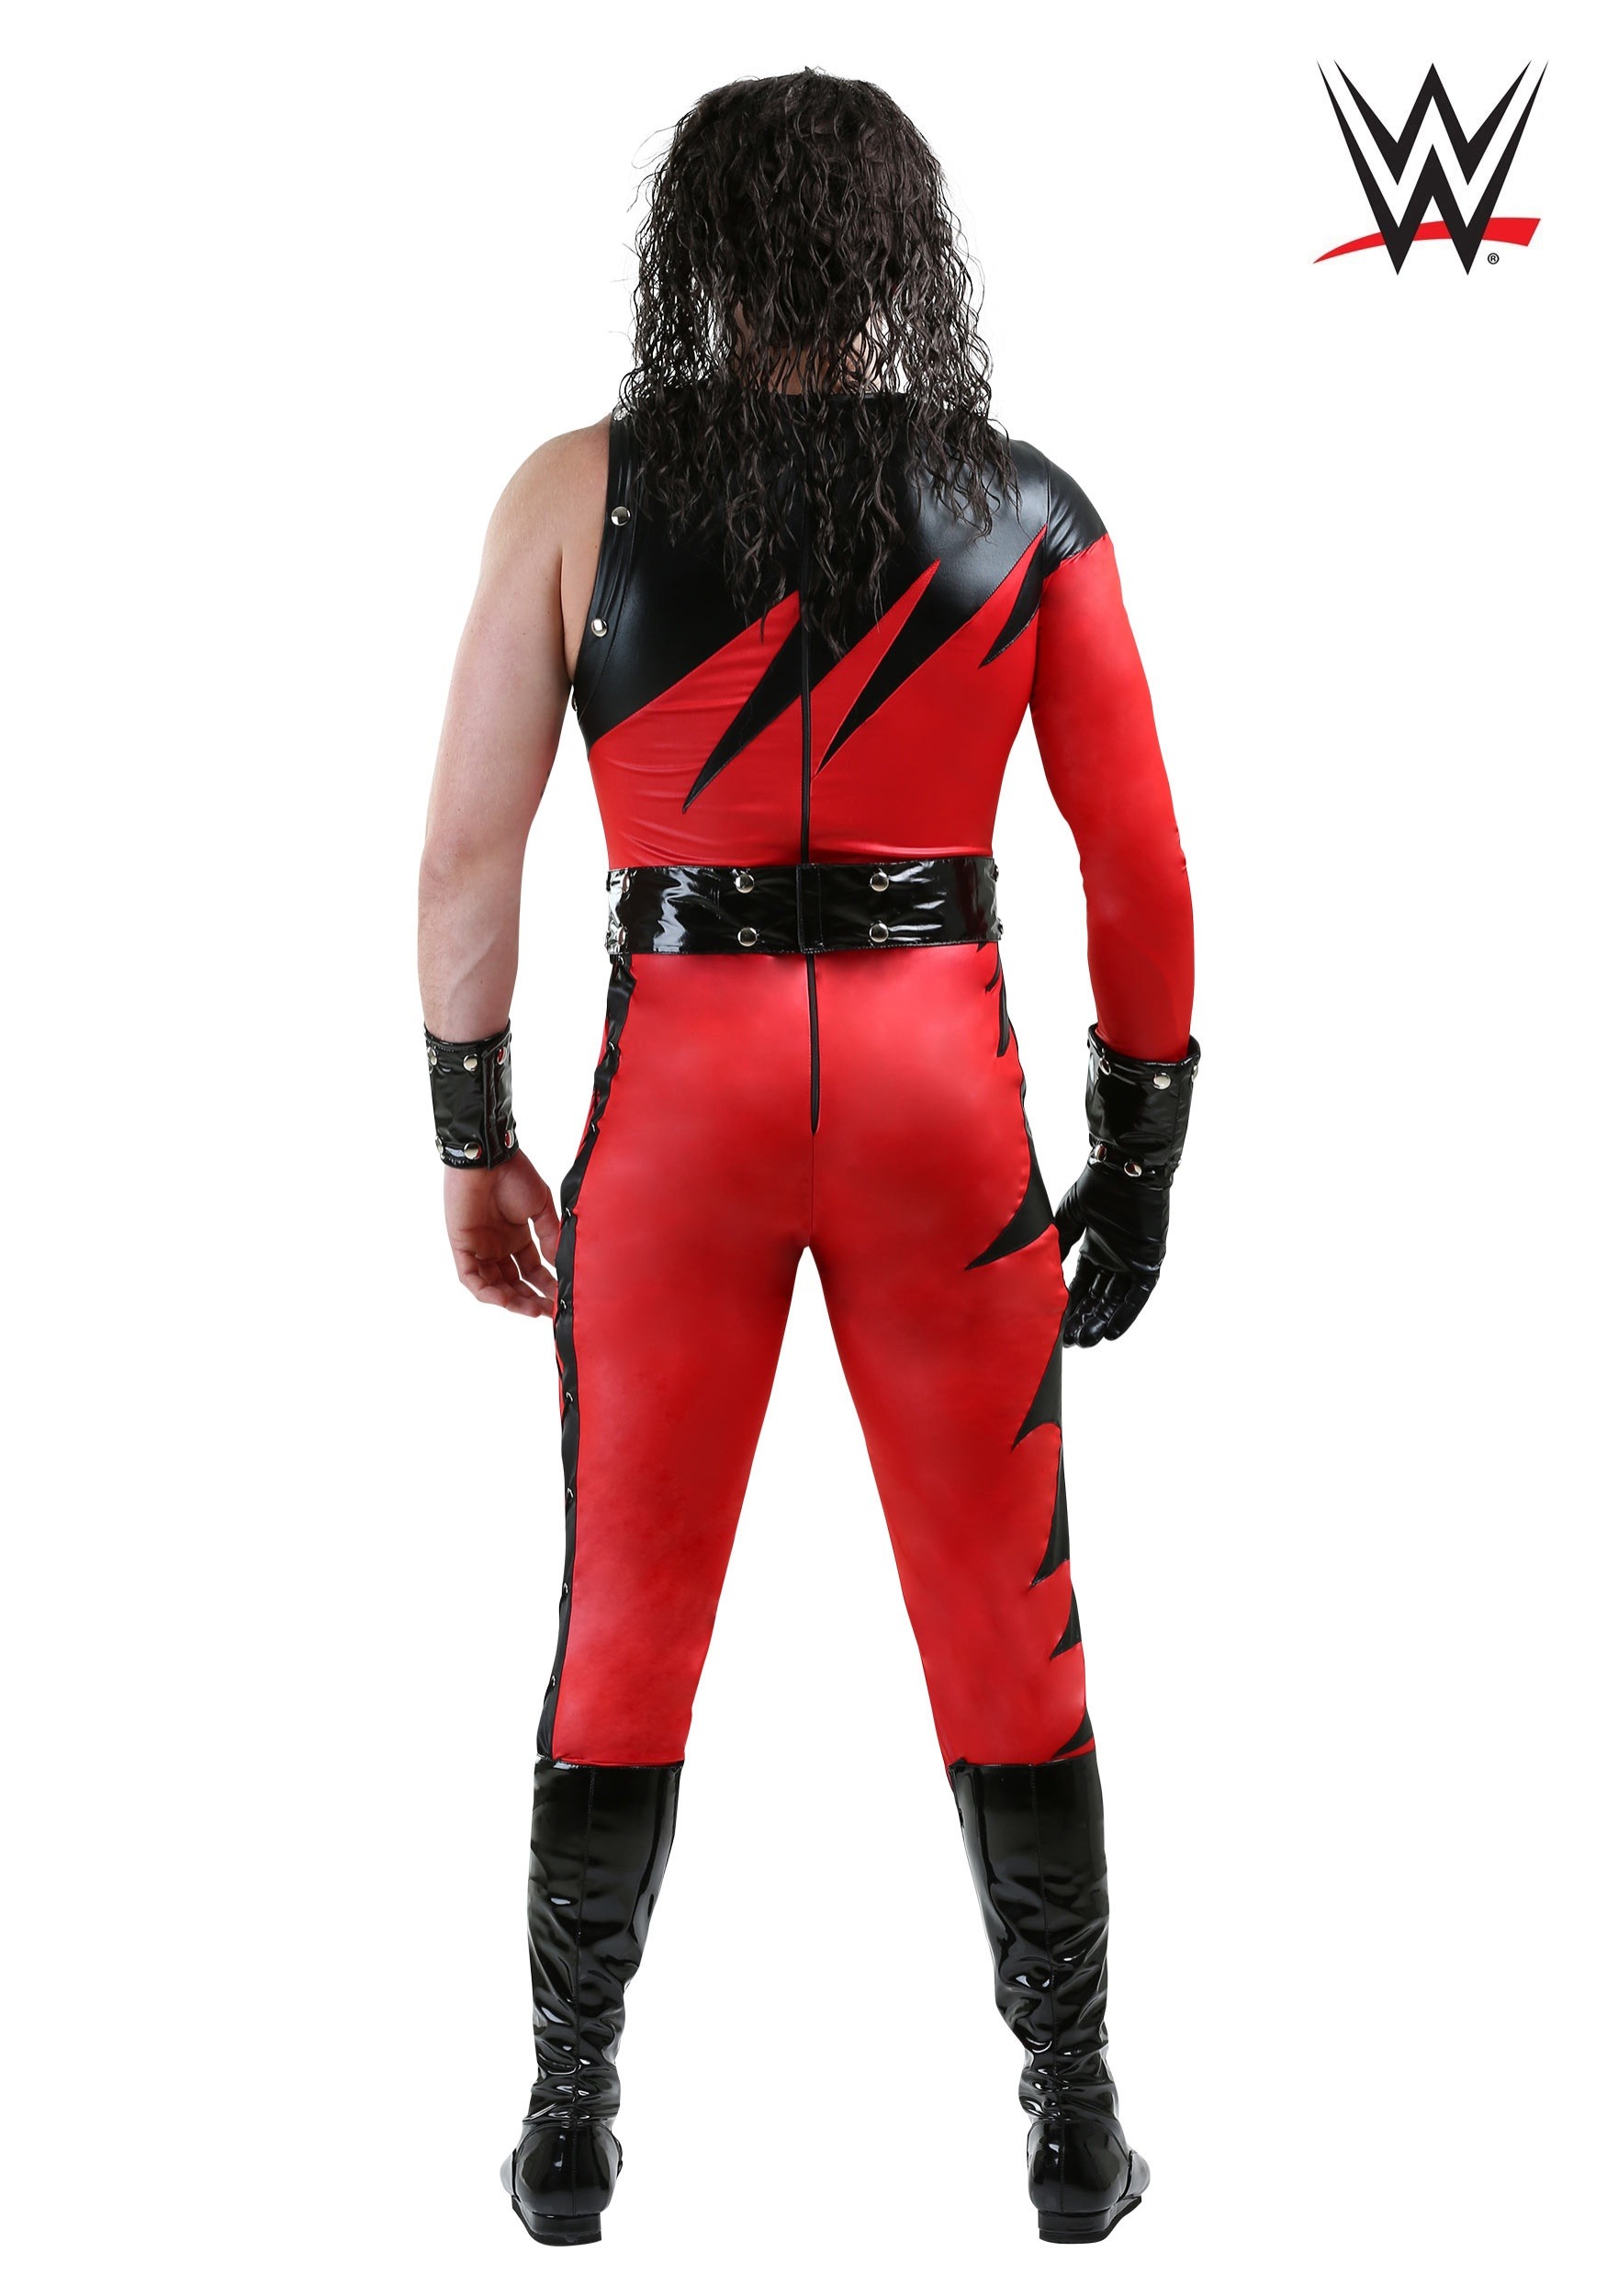 Kane Mask WWE Pro Wrestler Fancy Dress Up Halloween Adult Costume Accessory...